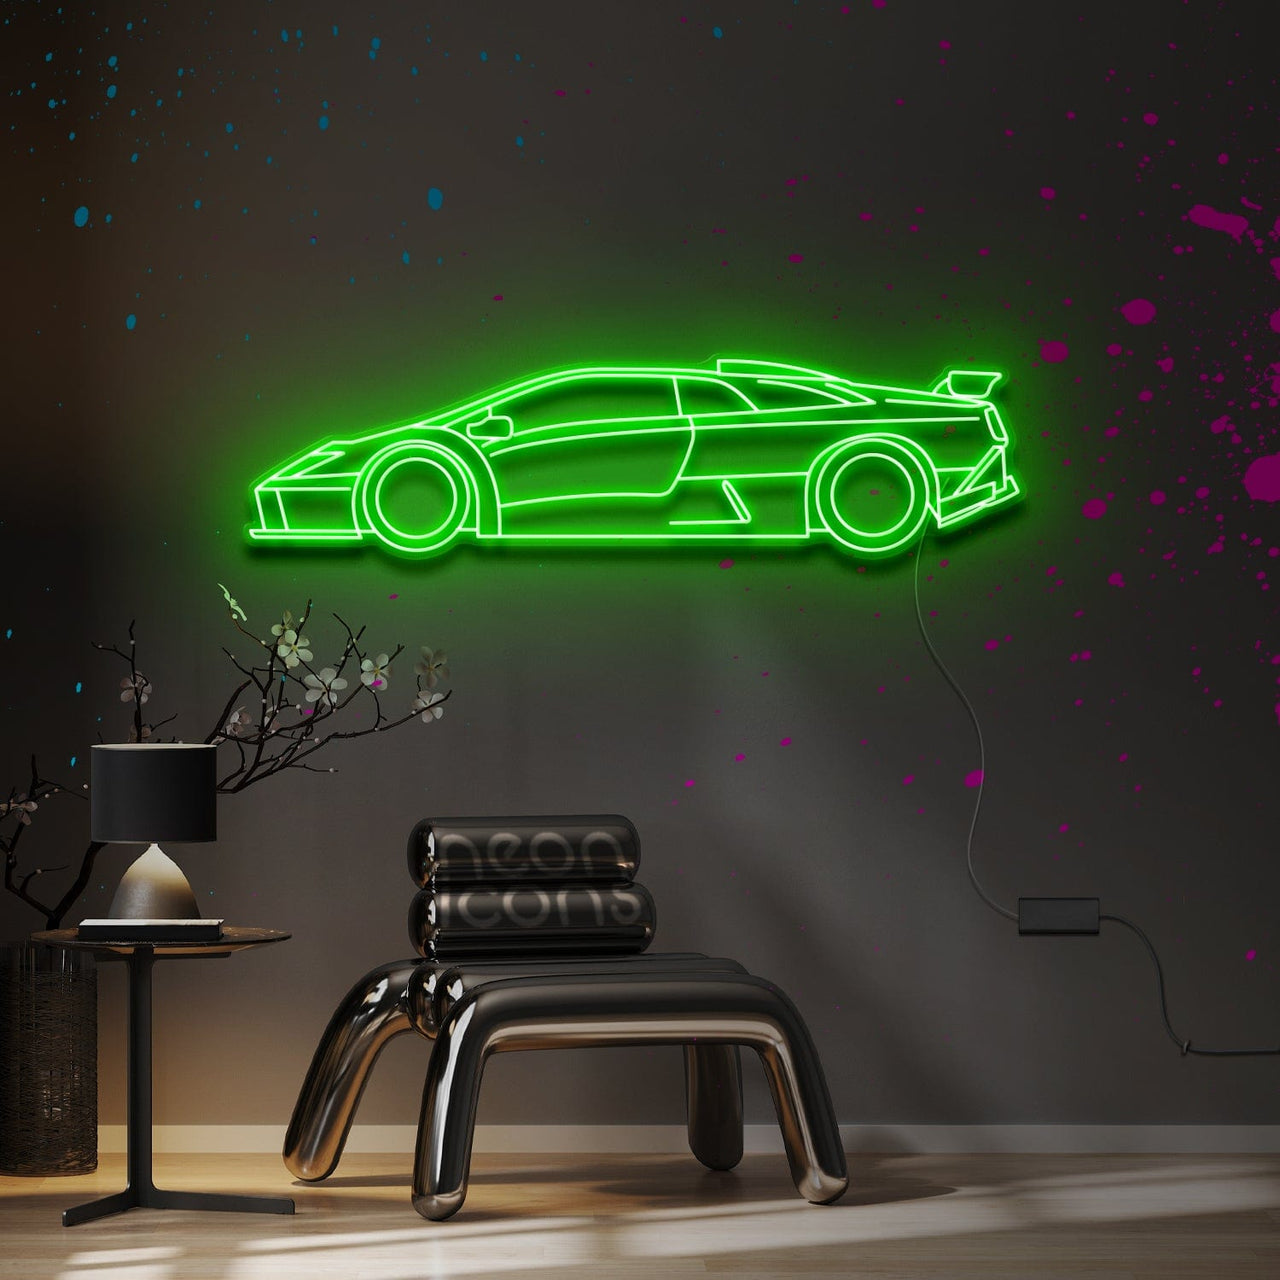 "Lamborghini Diablo GTR" Neon Sign 4ft x 1.1ft / Green / LED Neon by Neon Icons